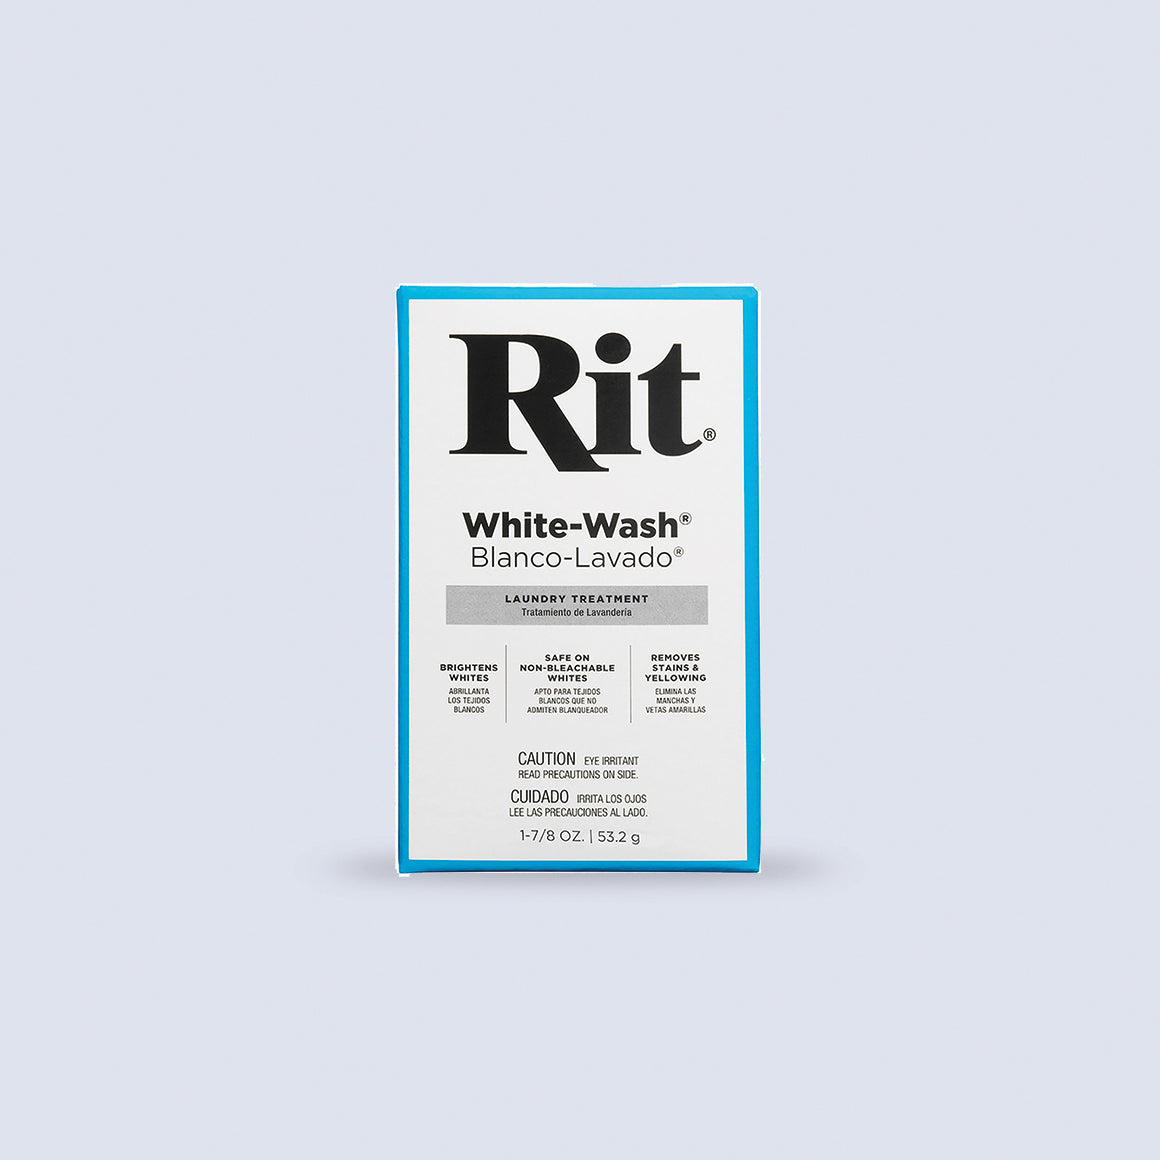 Rit Whitener & Brightener Laundry Treatment - 8 fl oz